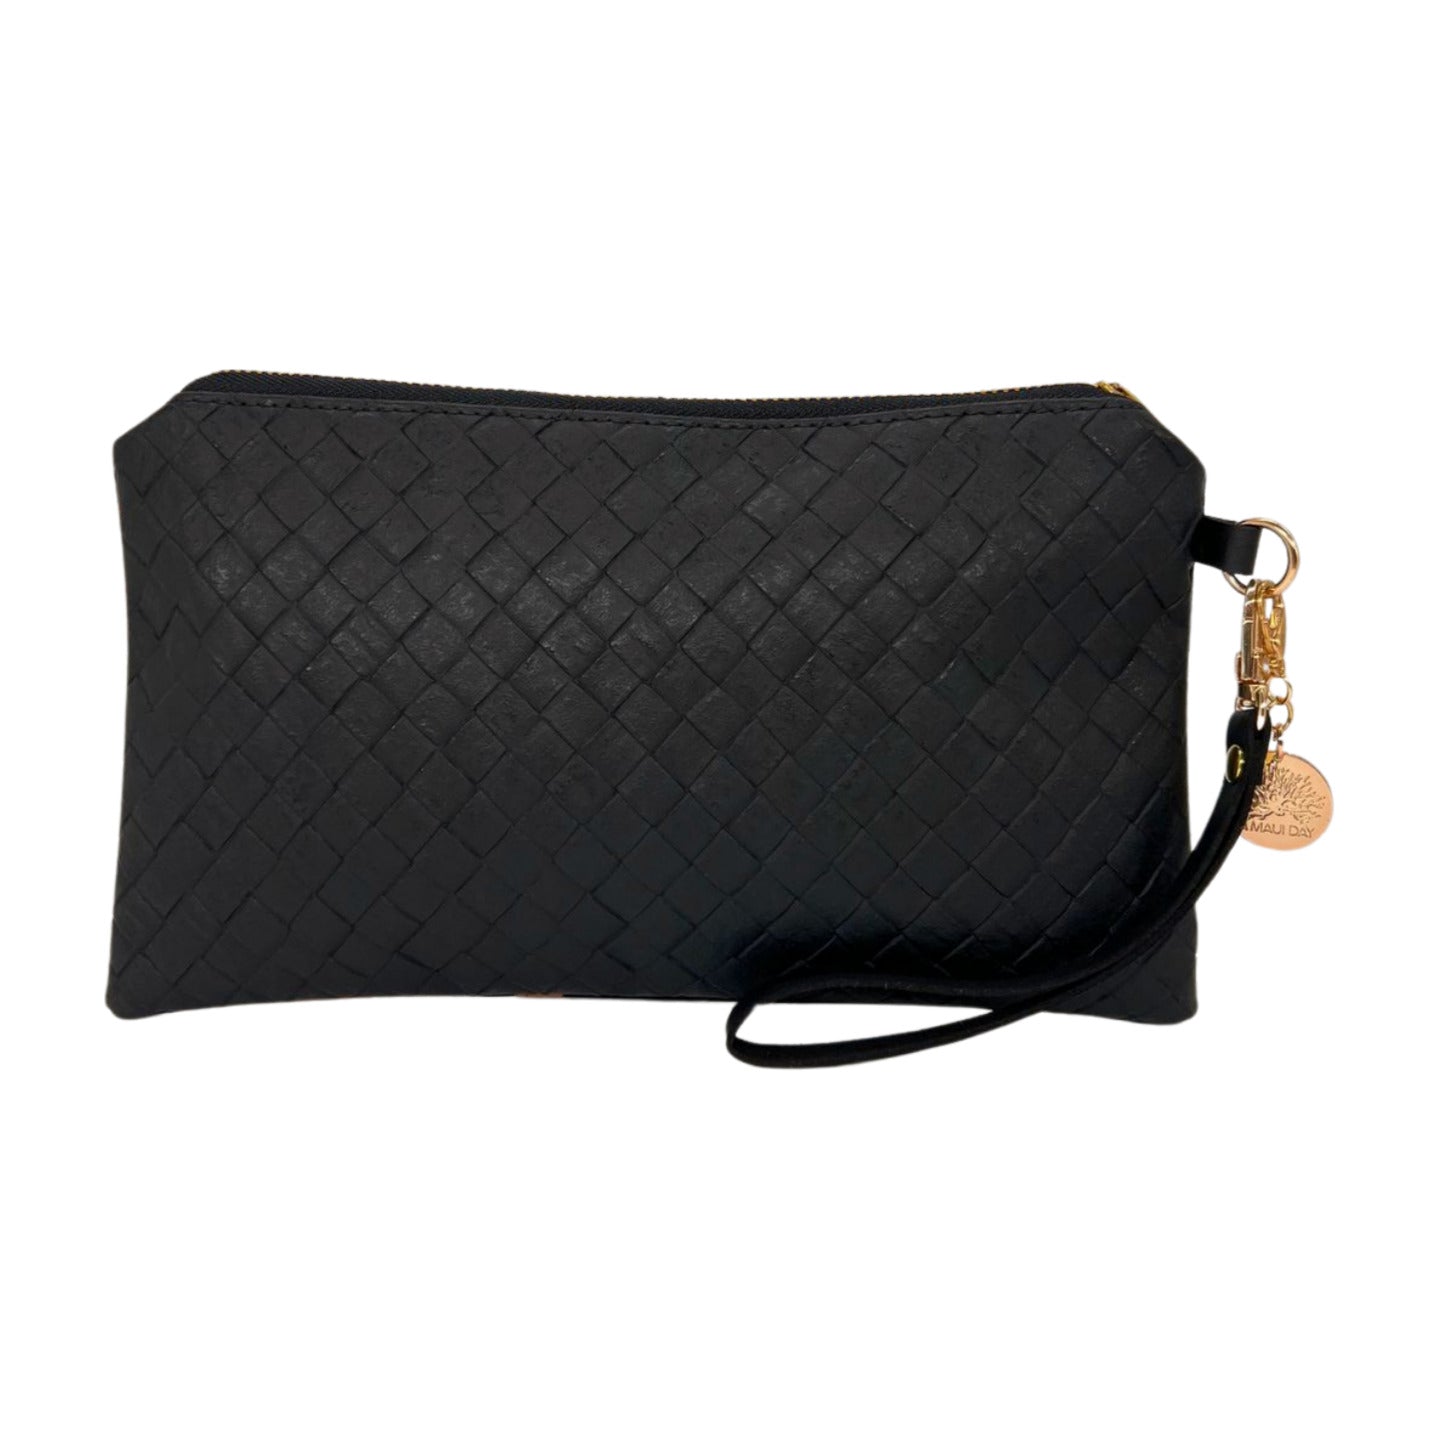 Pop-Up Mākeke - A Maui Day Original Handbags - Handprinted Small Handbag - Laua'e on Black Canvas - Back View